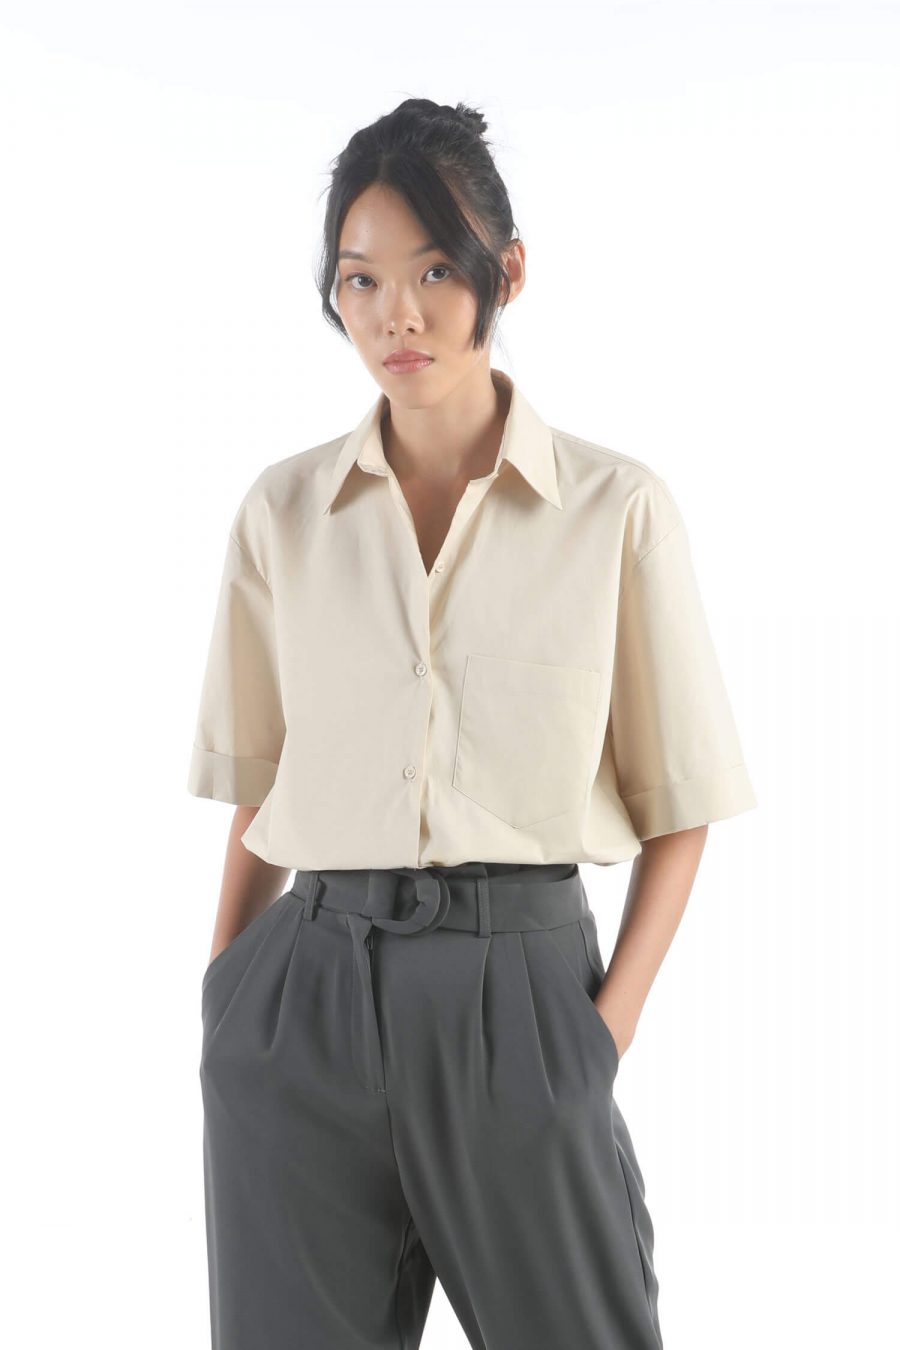 singapore-womens-button-up-shirt